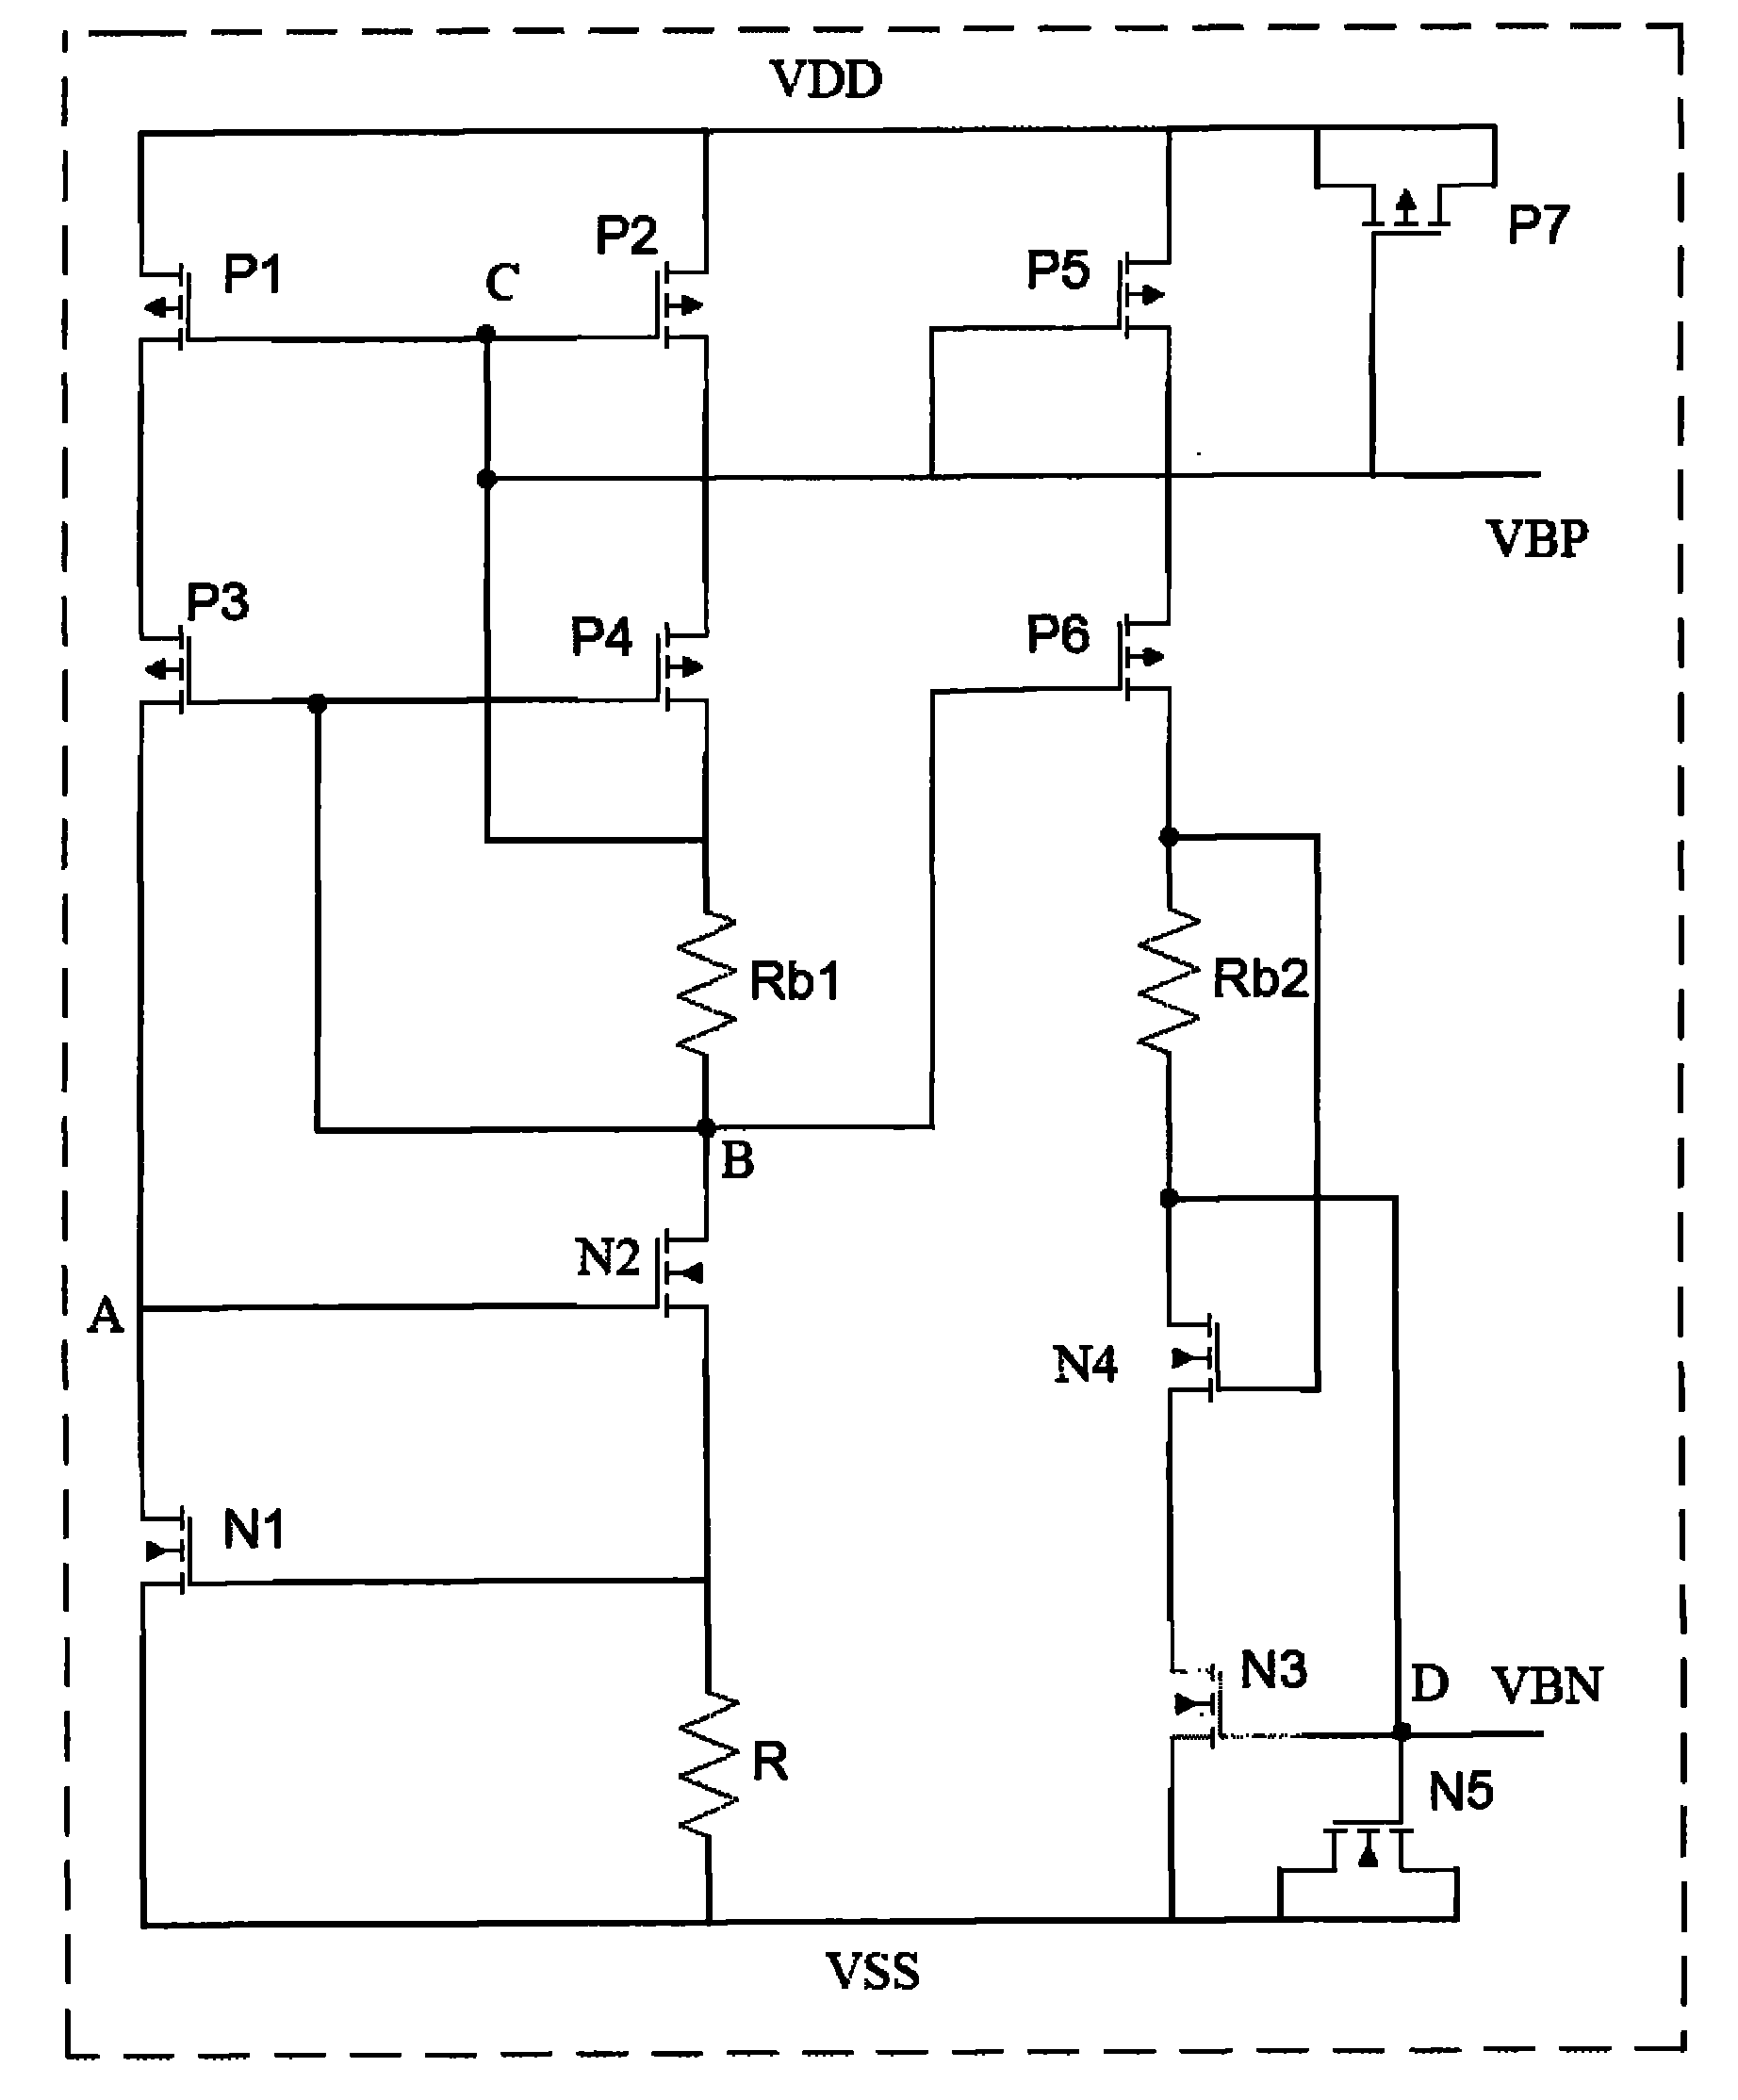 Clock signal generating circuit